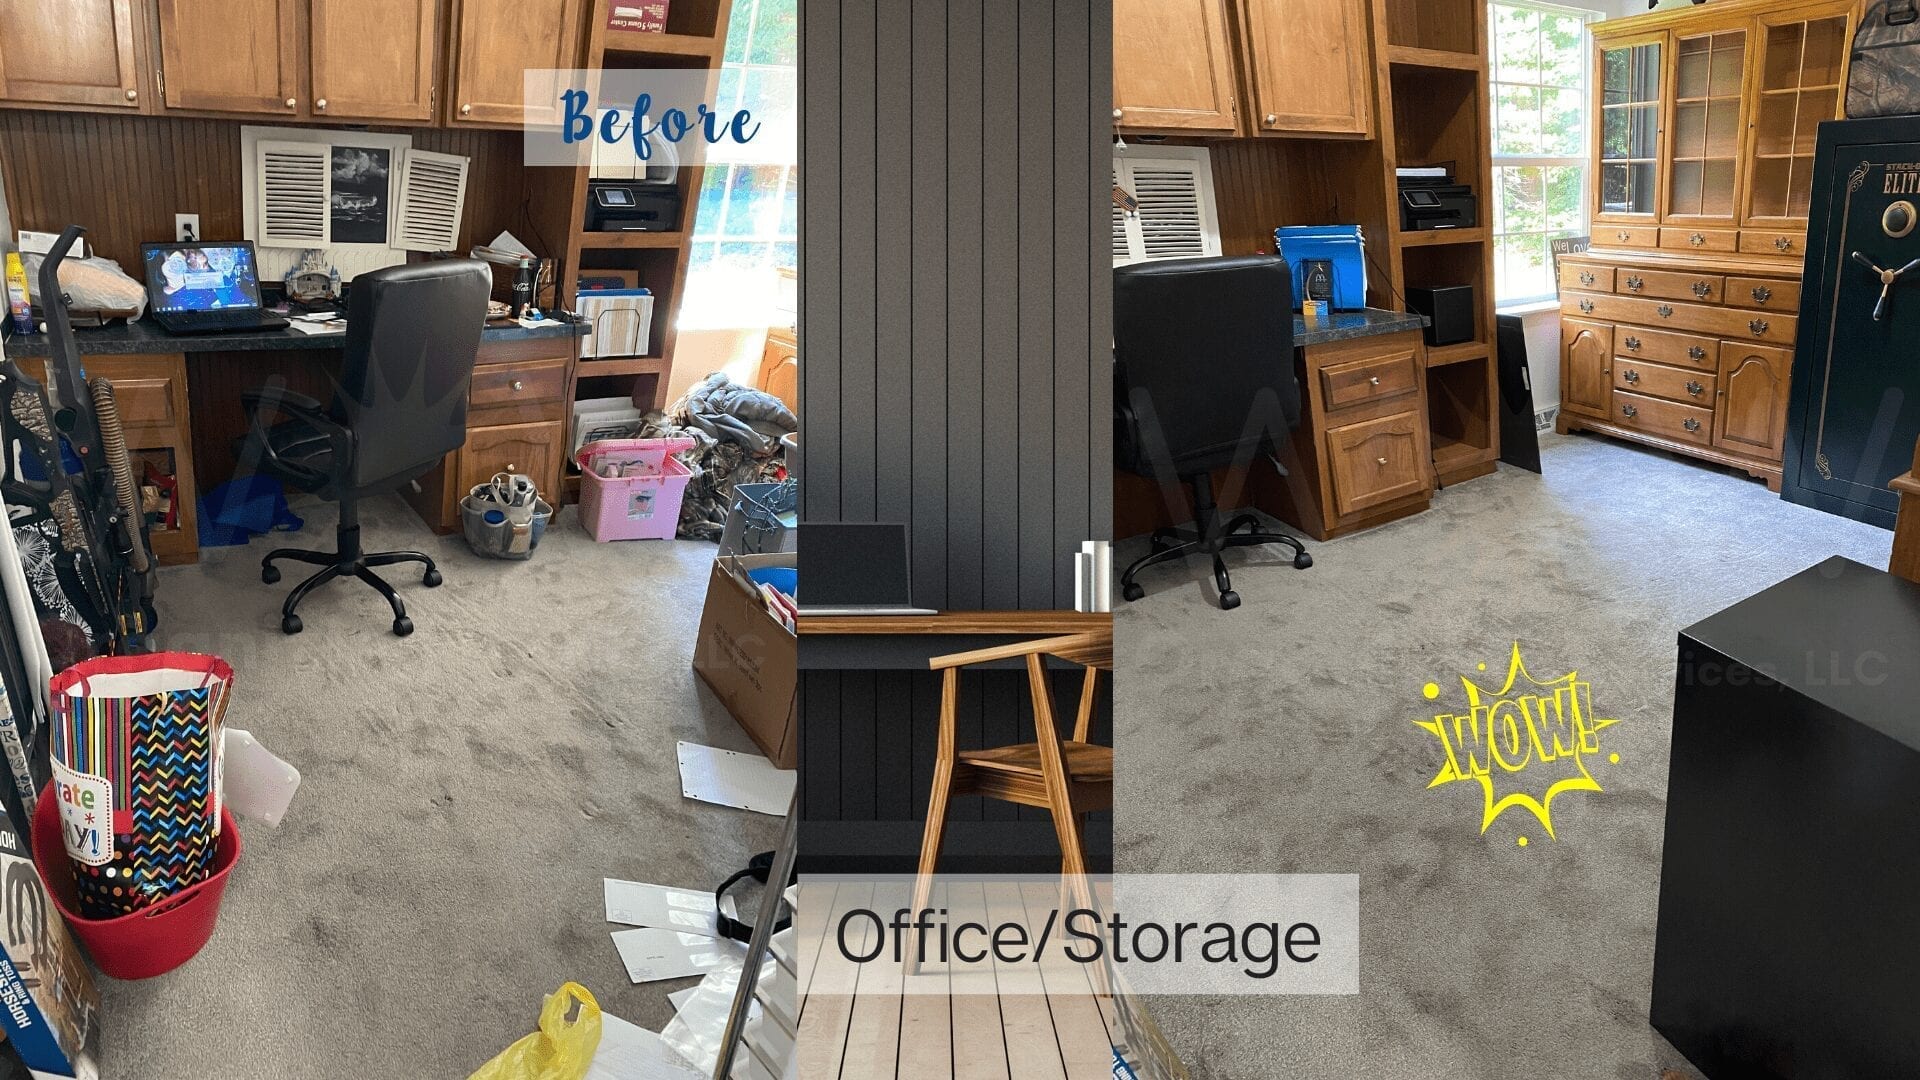 office & storage room organized